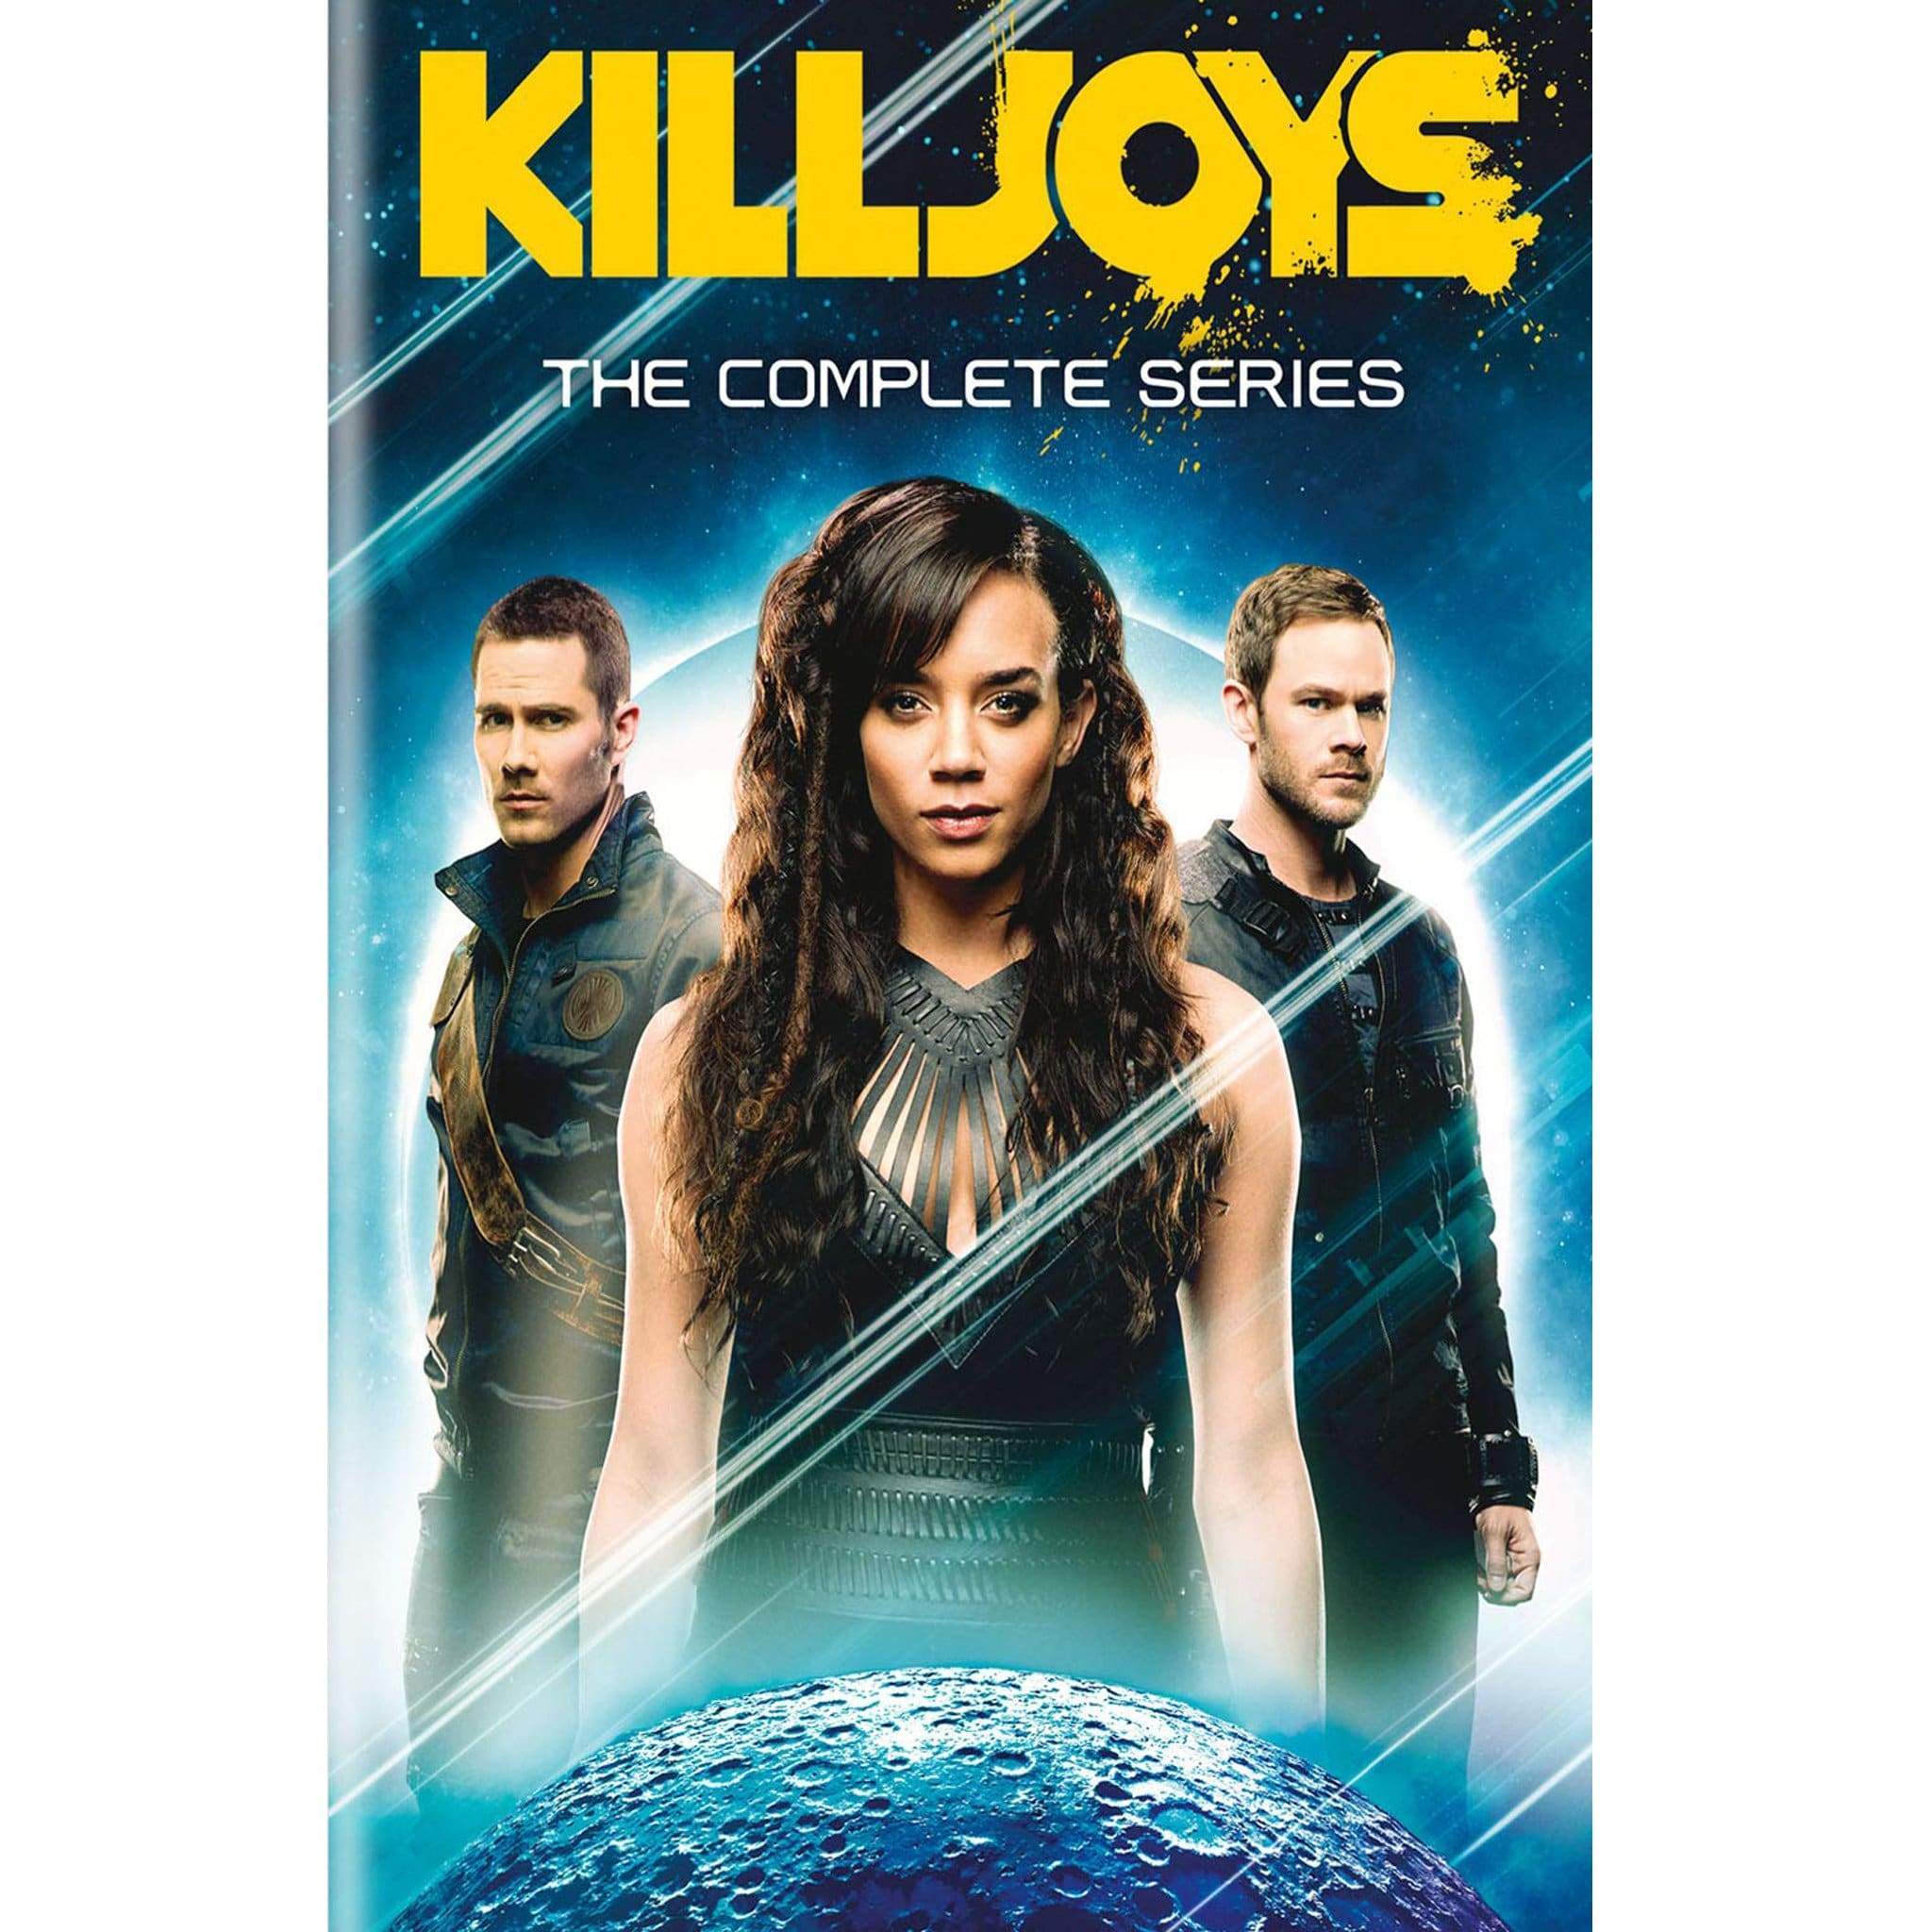 Killjoys The Complete Series on DVD Universal Studios DVDs & Blu-ray Discs